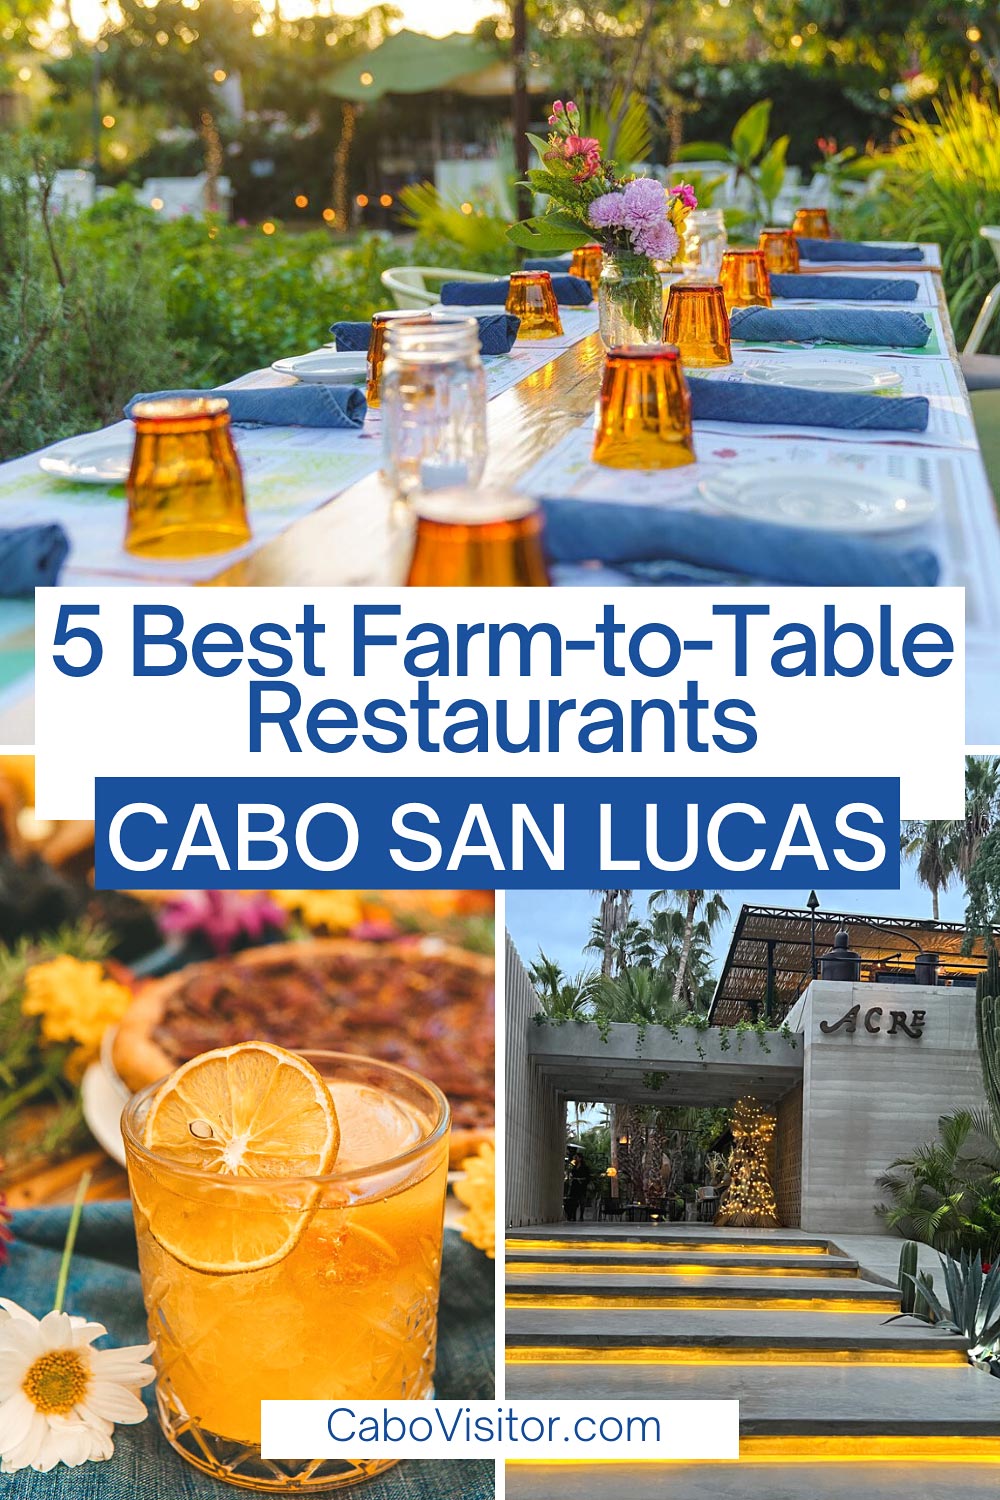 Cabo farm-to-table restaurants, Mexico